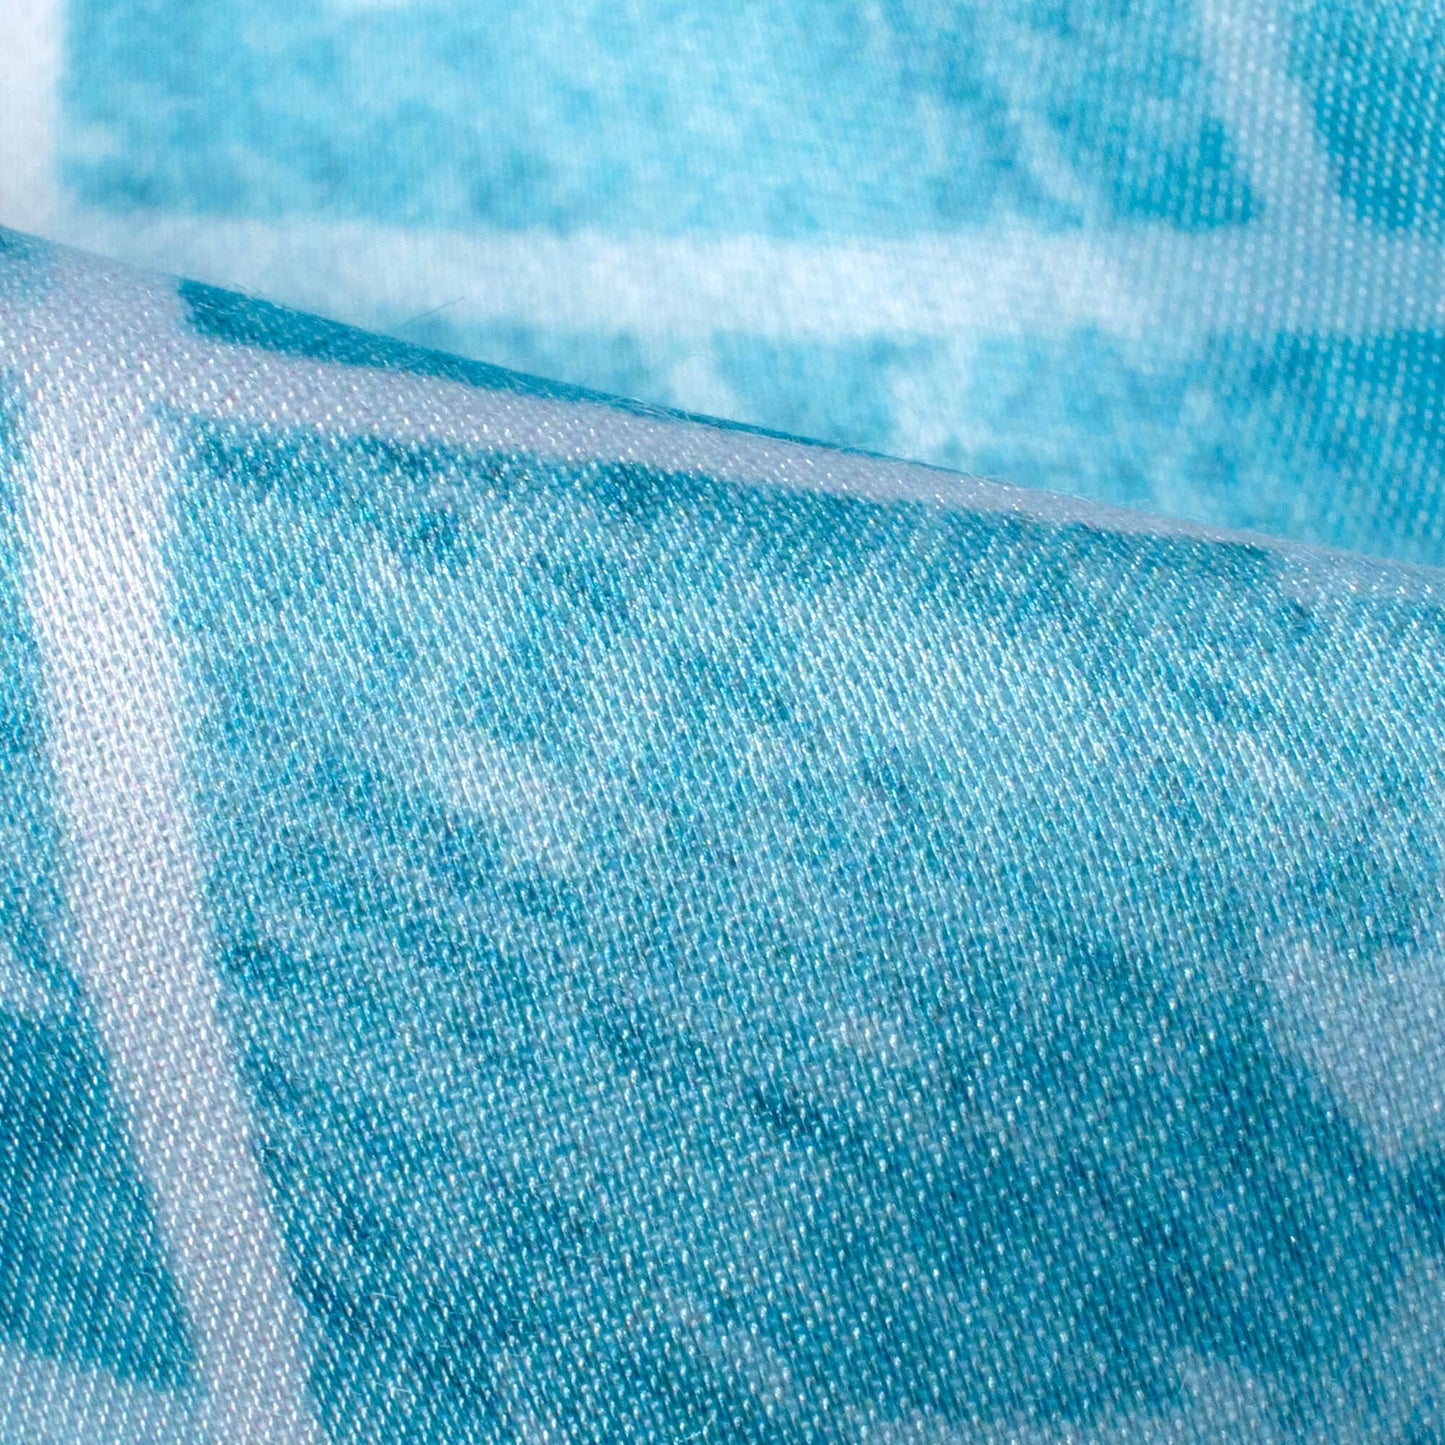 Sky Blue And White Geometric Pattern Digital Print Premium Lush Satin Fabric